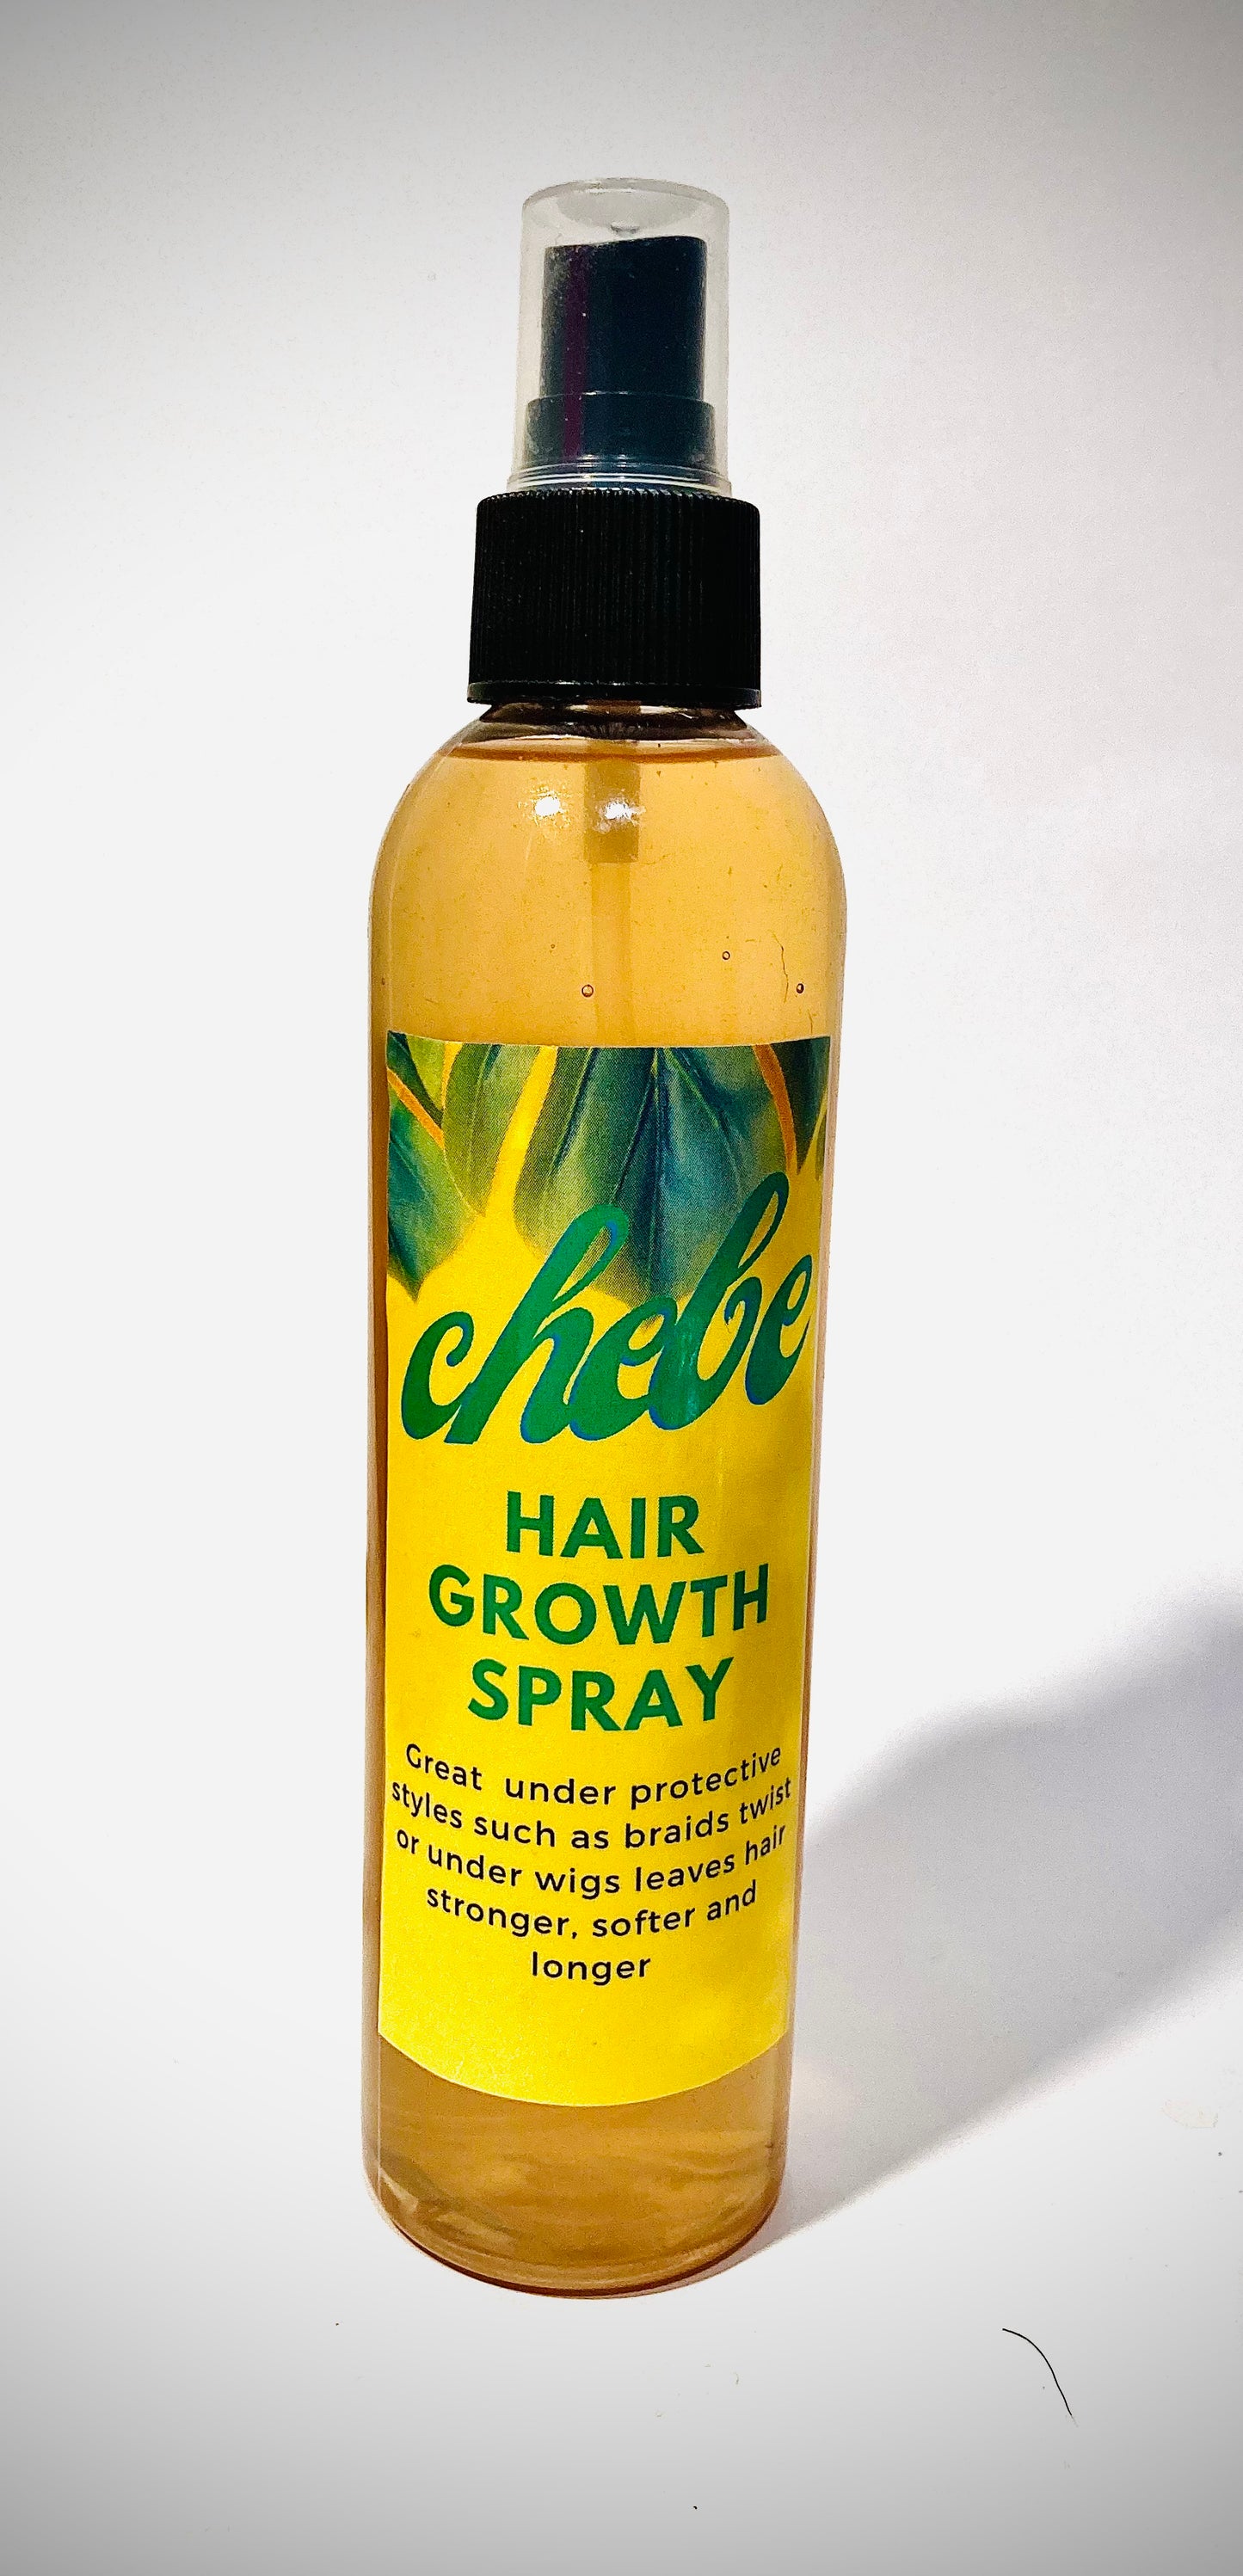 Chebe Hair Growth Spray